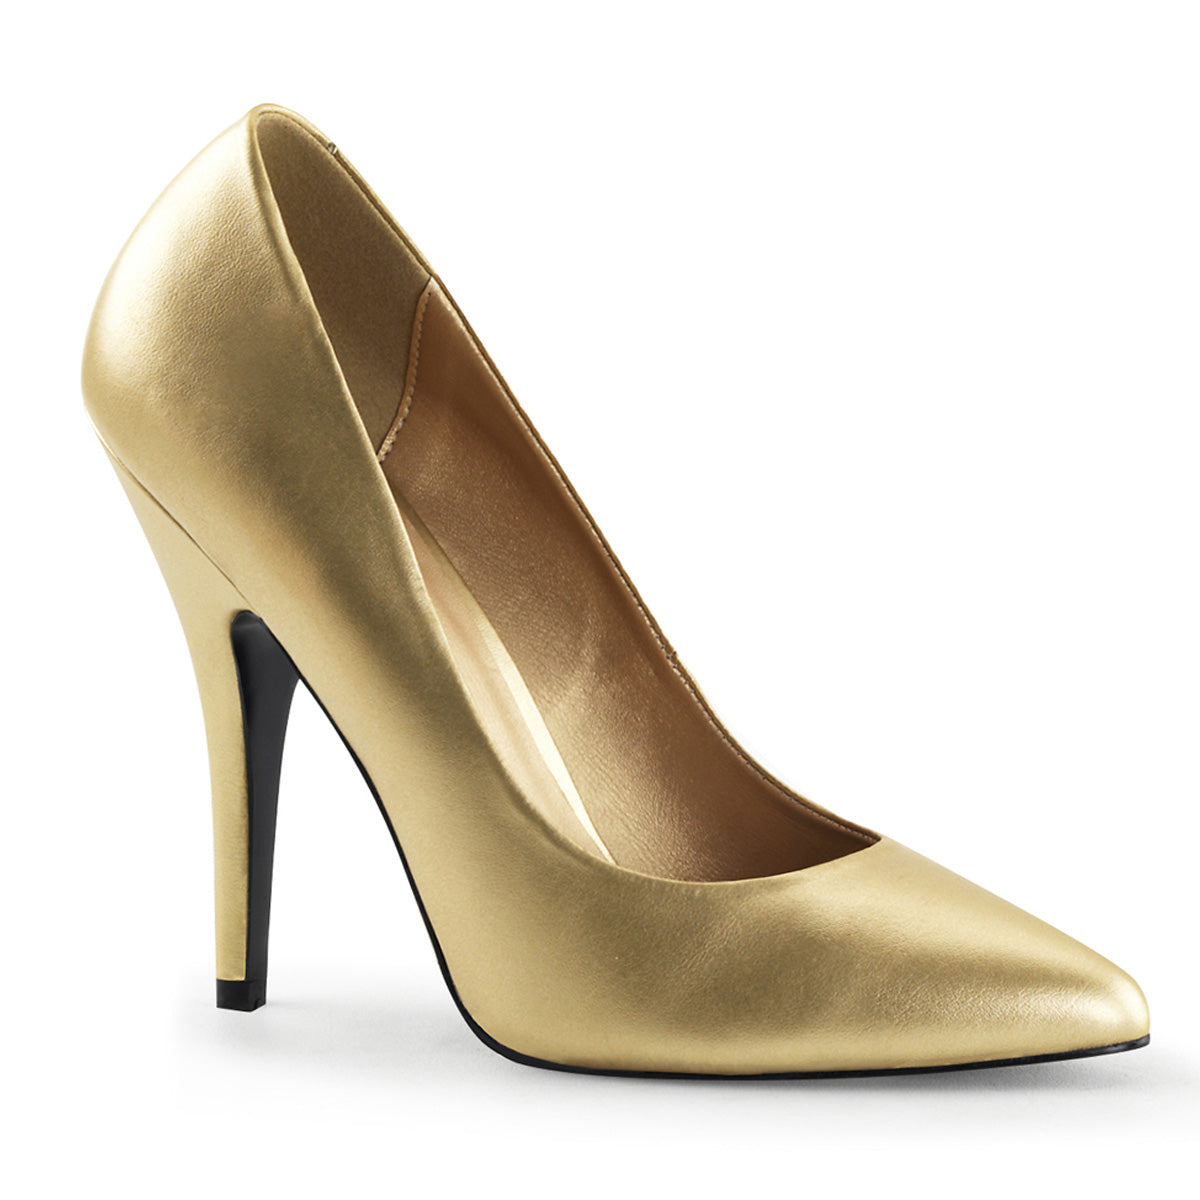 SEDUCE-420 Gold Leather Heels